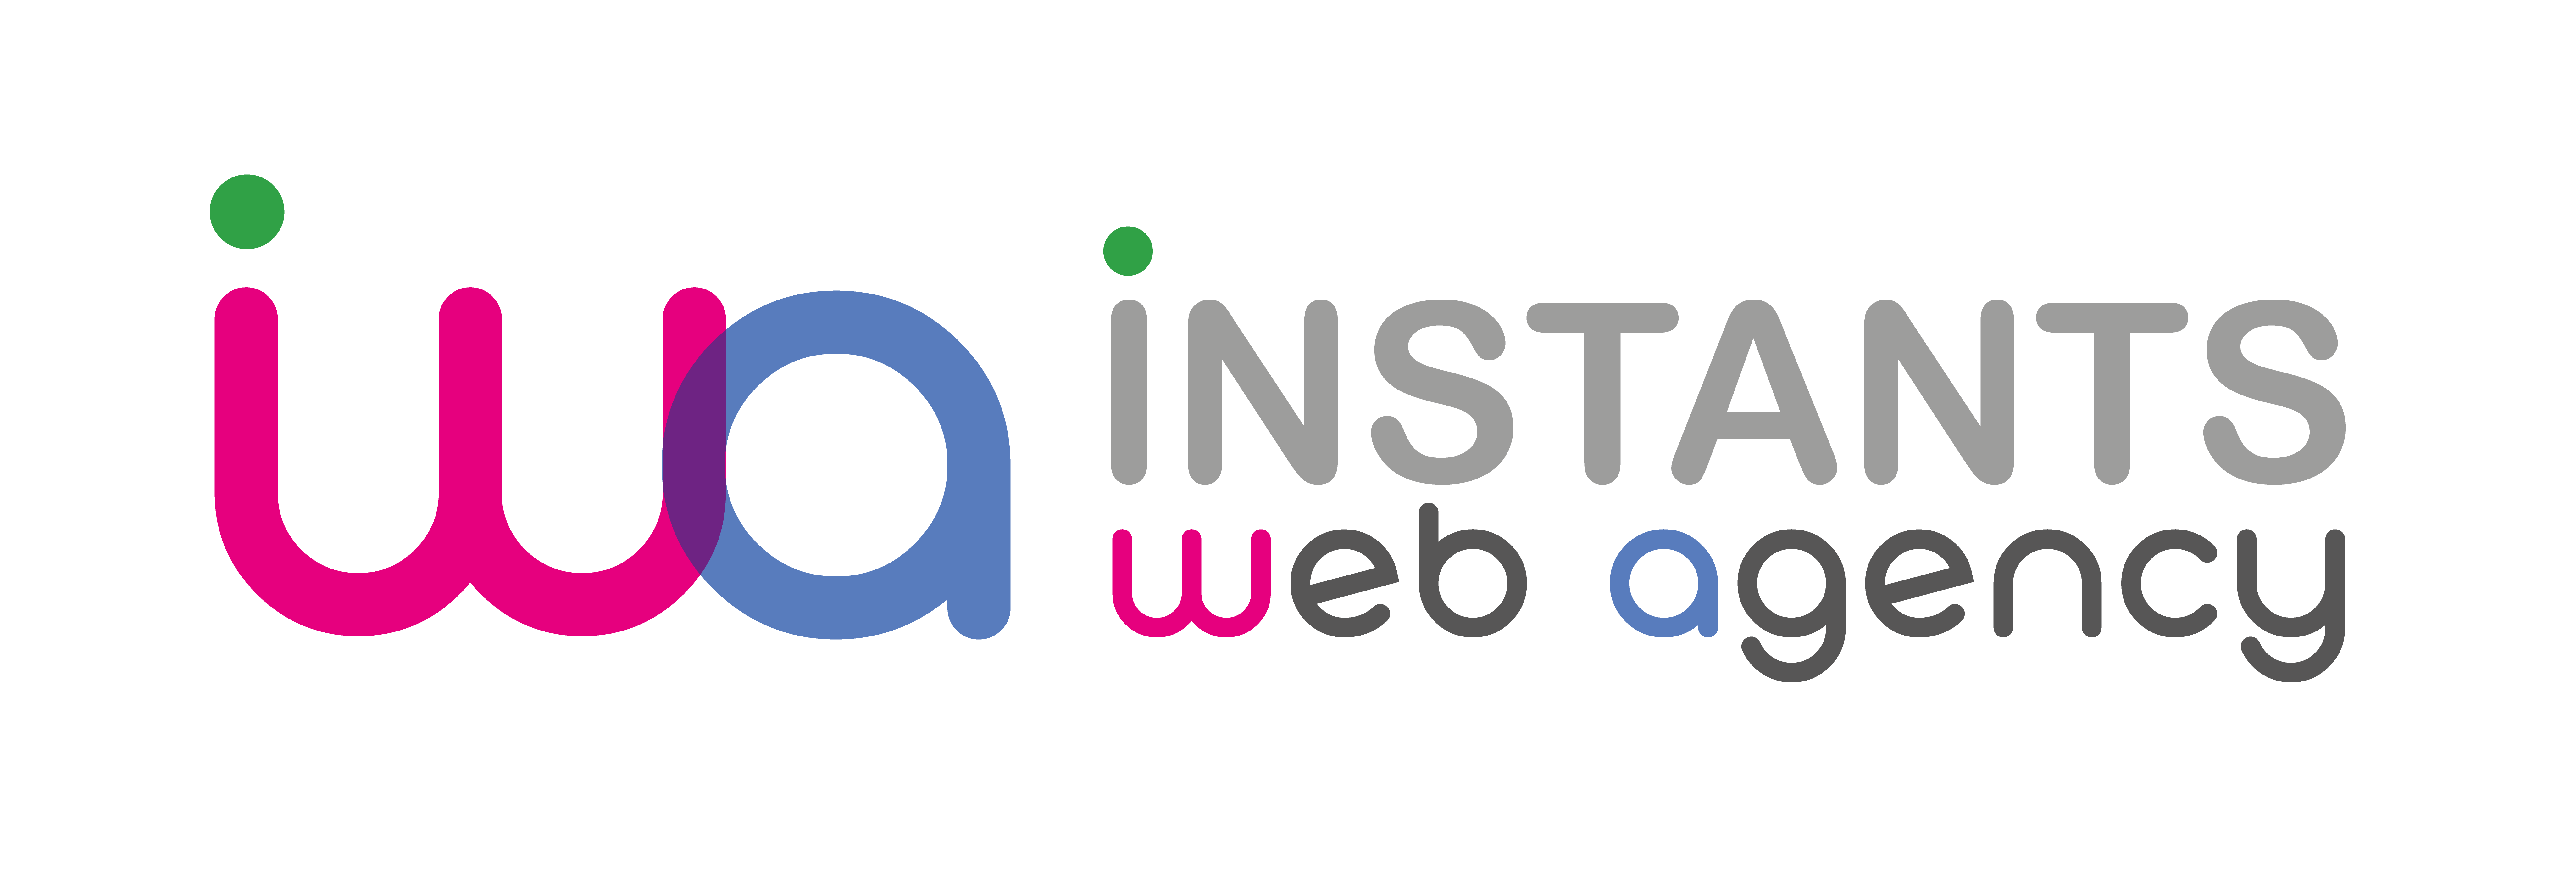                                                                                                     Instantsweb Agency
                                                                                            